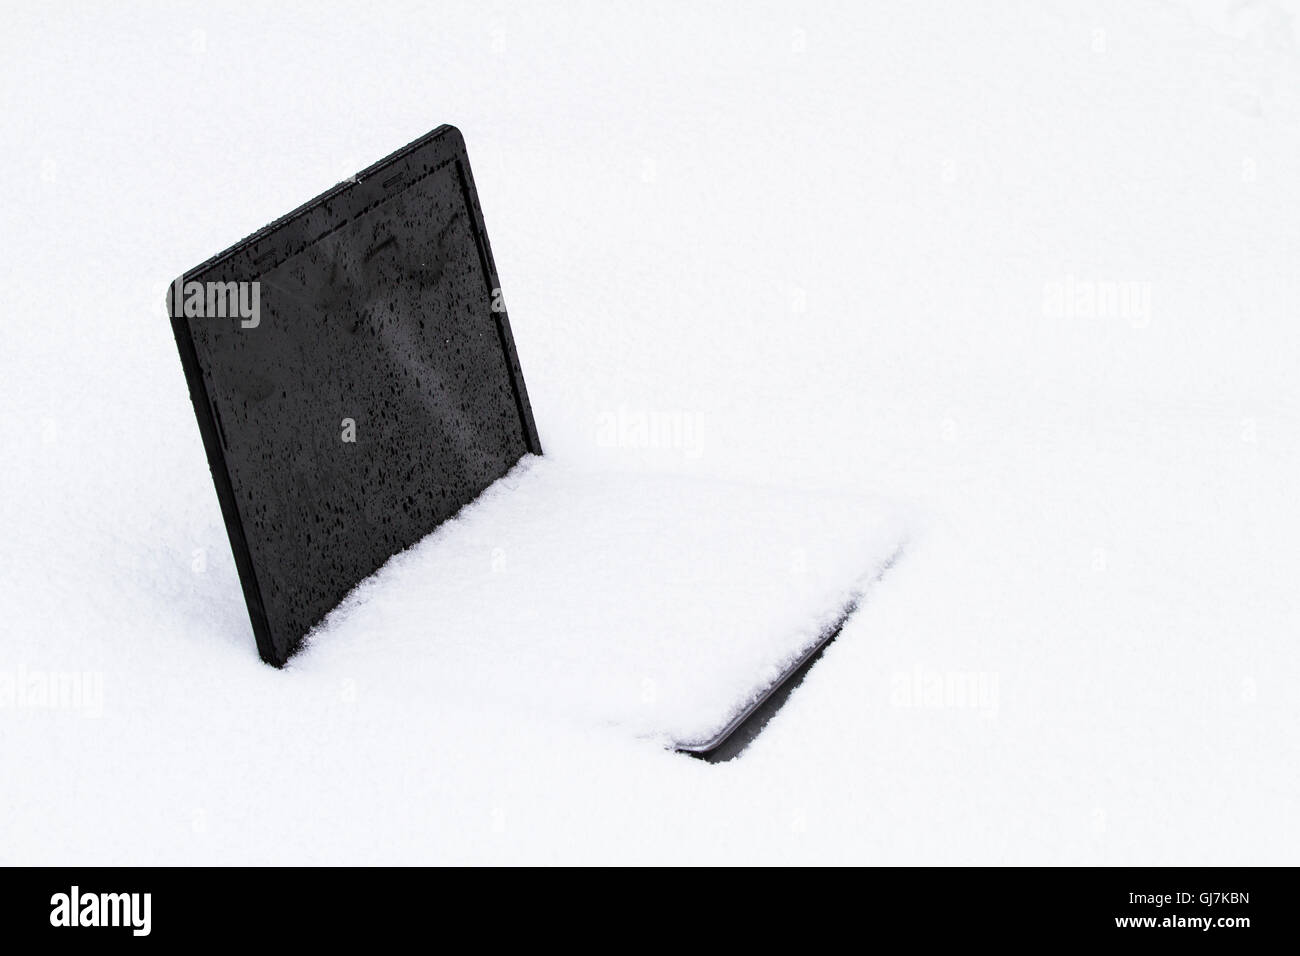 A frozen laptop computer half buried in a snow drift Stock Photo